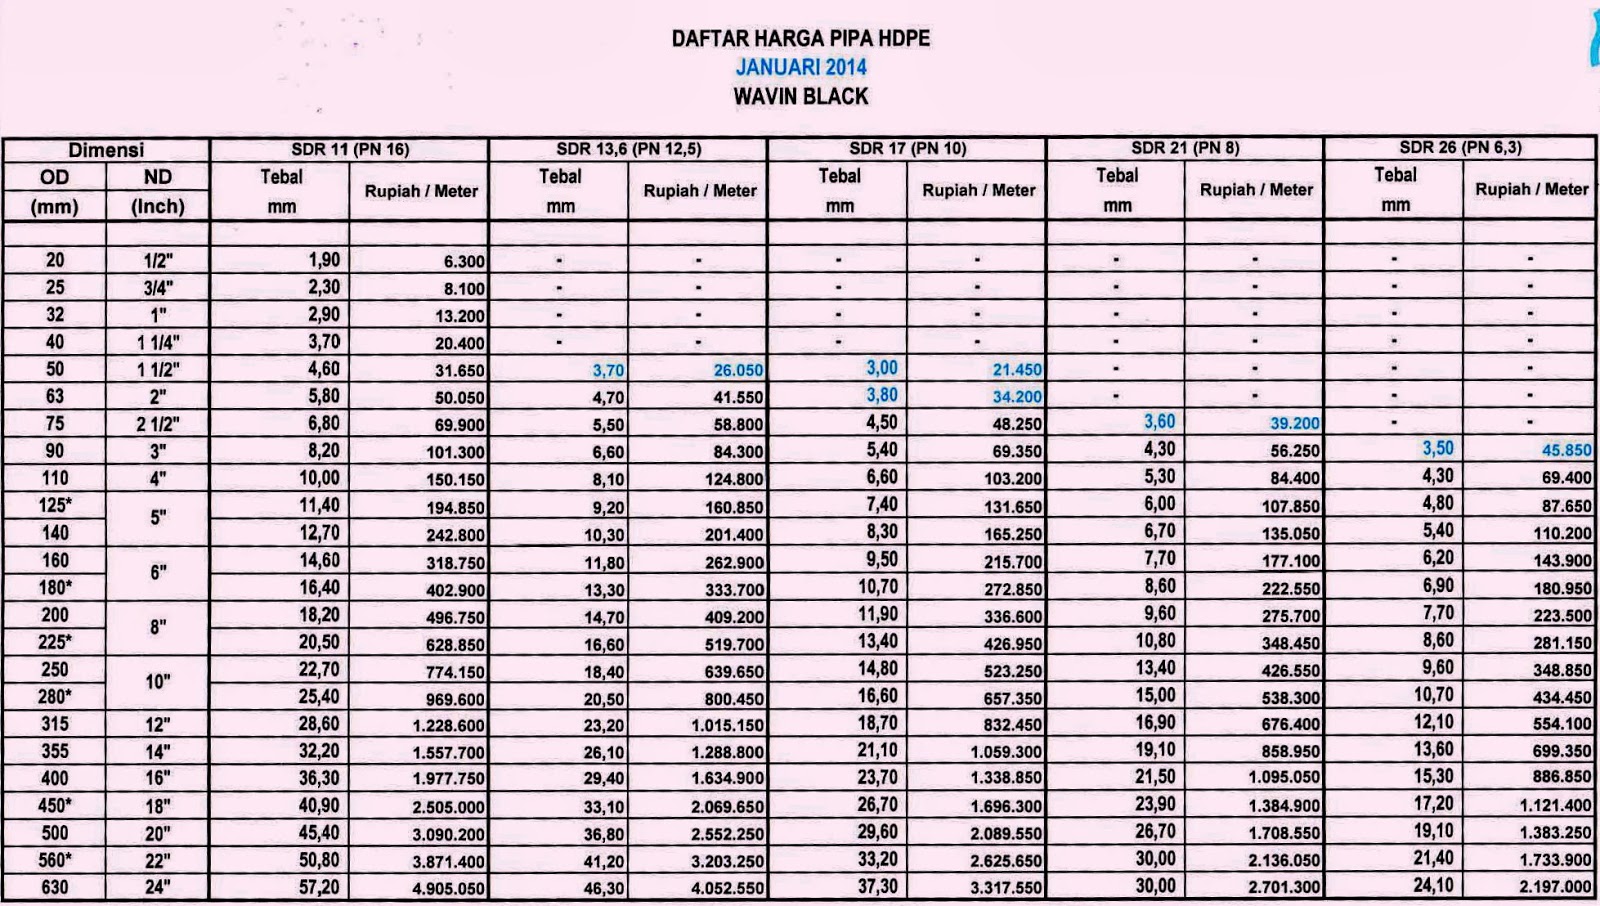  HDPE Indonesia DAFTAR HARGA PIPA HDPE WAVIN JANUARI 2020